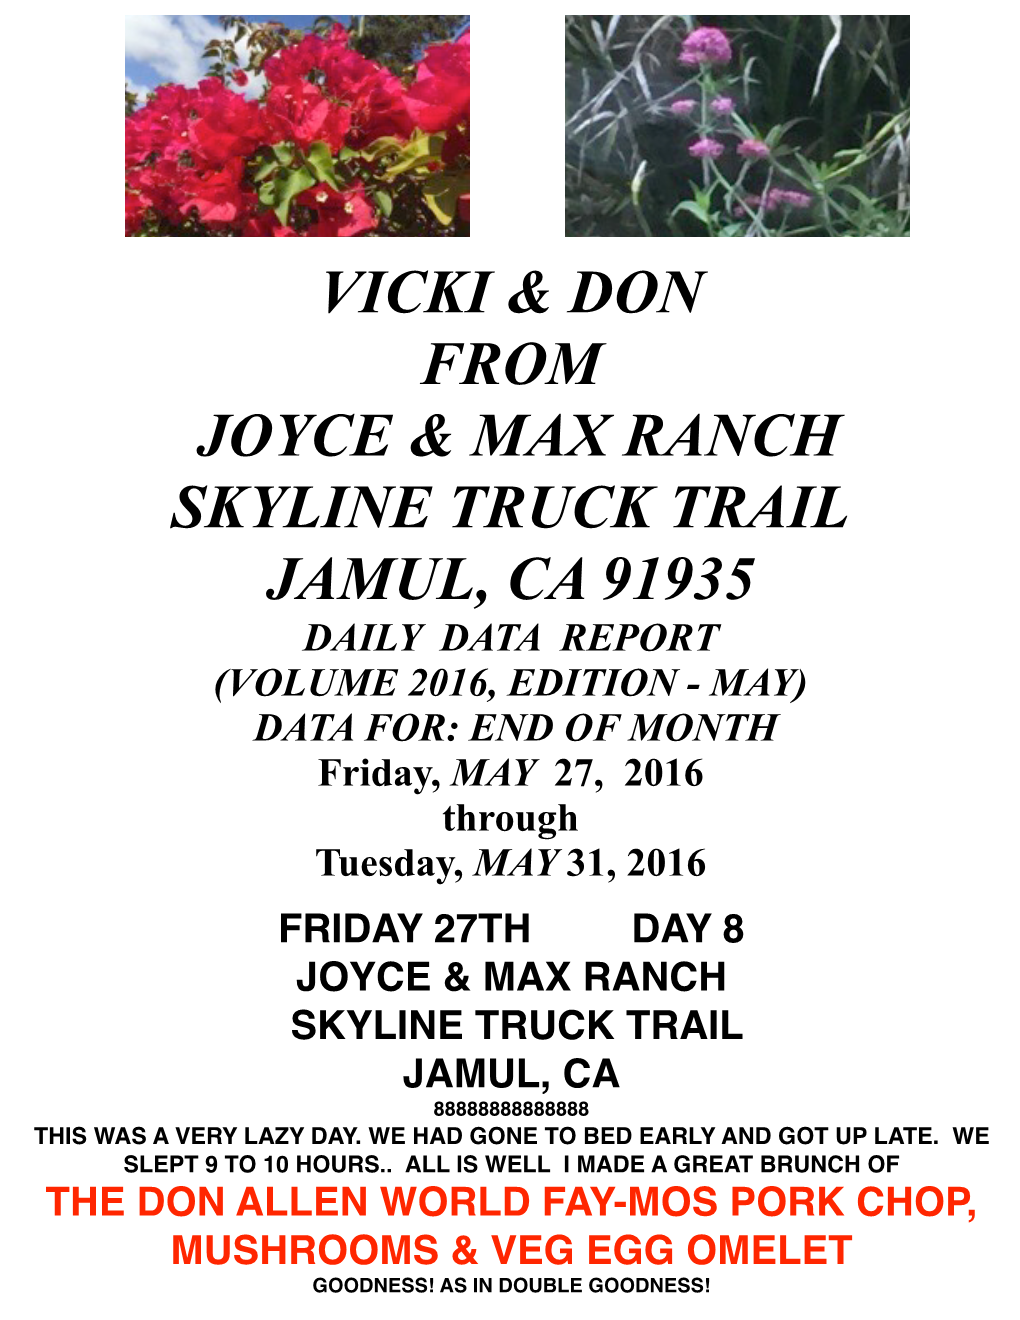 Vicki & Don from Joyce & Max Ranch Skyline Truck Trail Jamul, Ca 91935